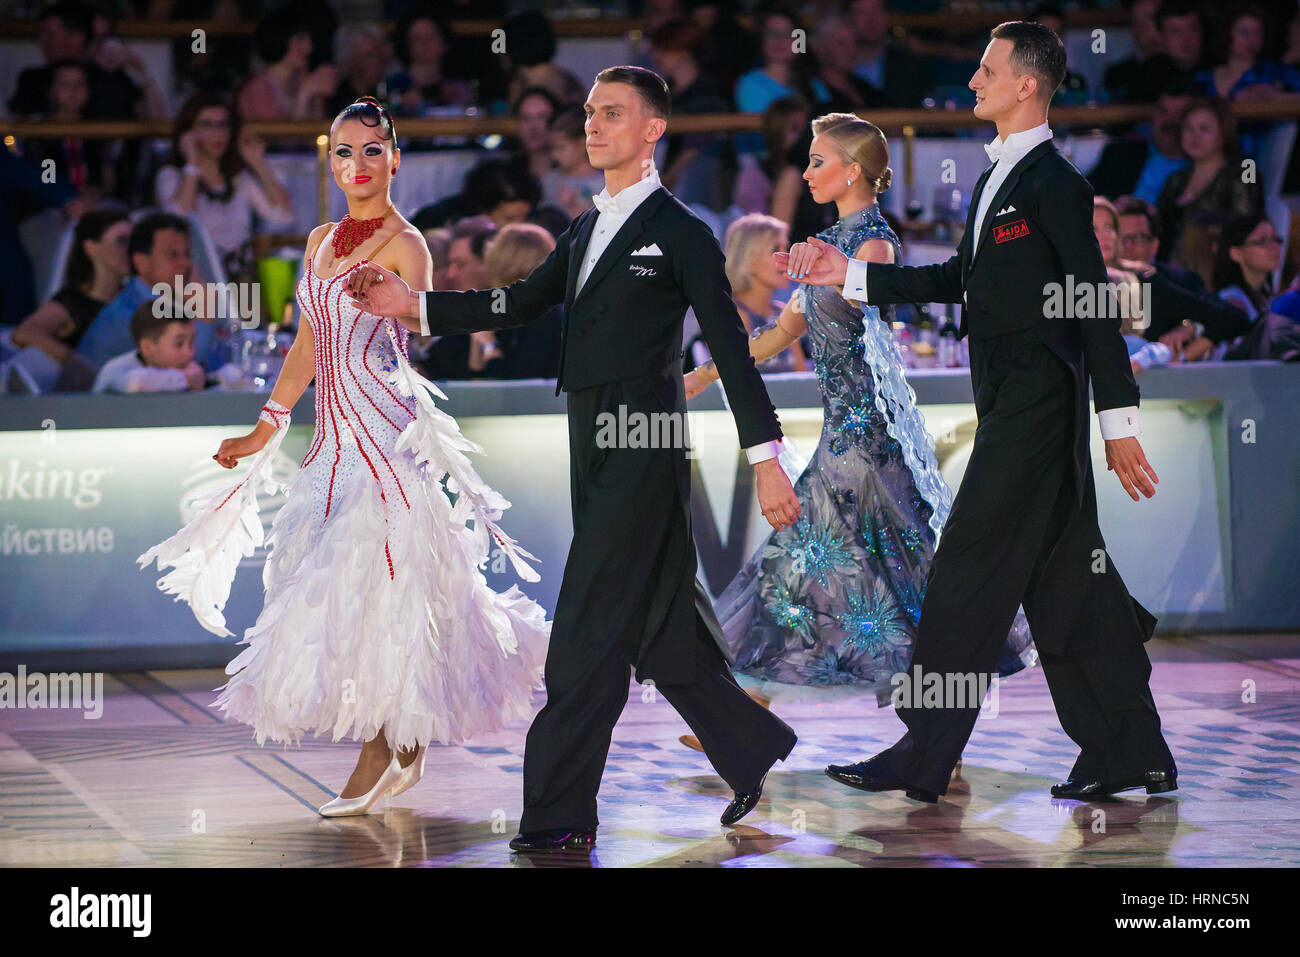 Moskau, Russland - 26. April 2015: Paare im Gesellschaftstanz Ereignis am 2015 Open European Professional Latin-American Championship. Stockfoto